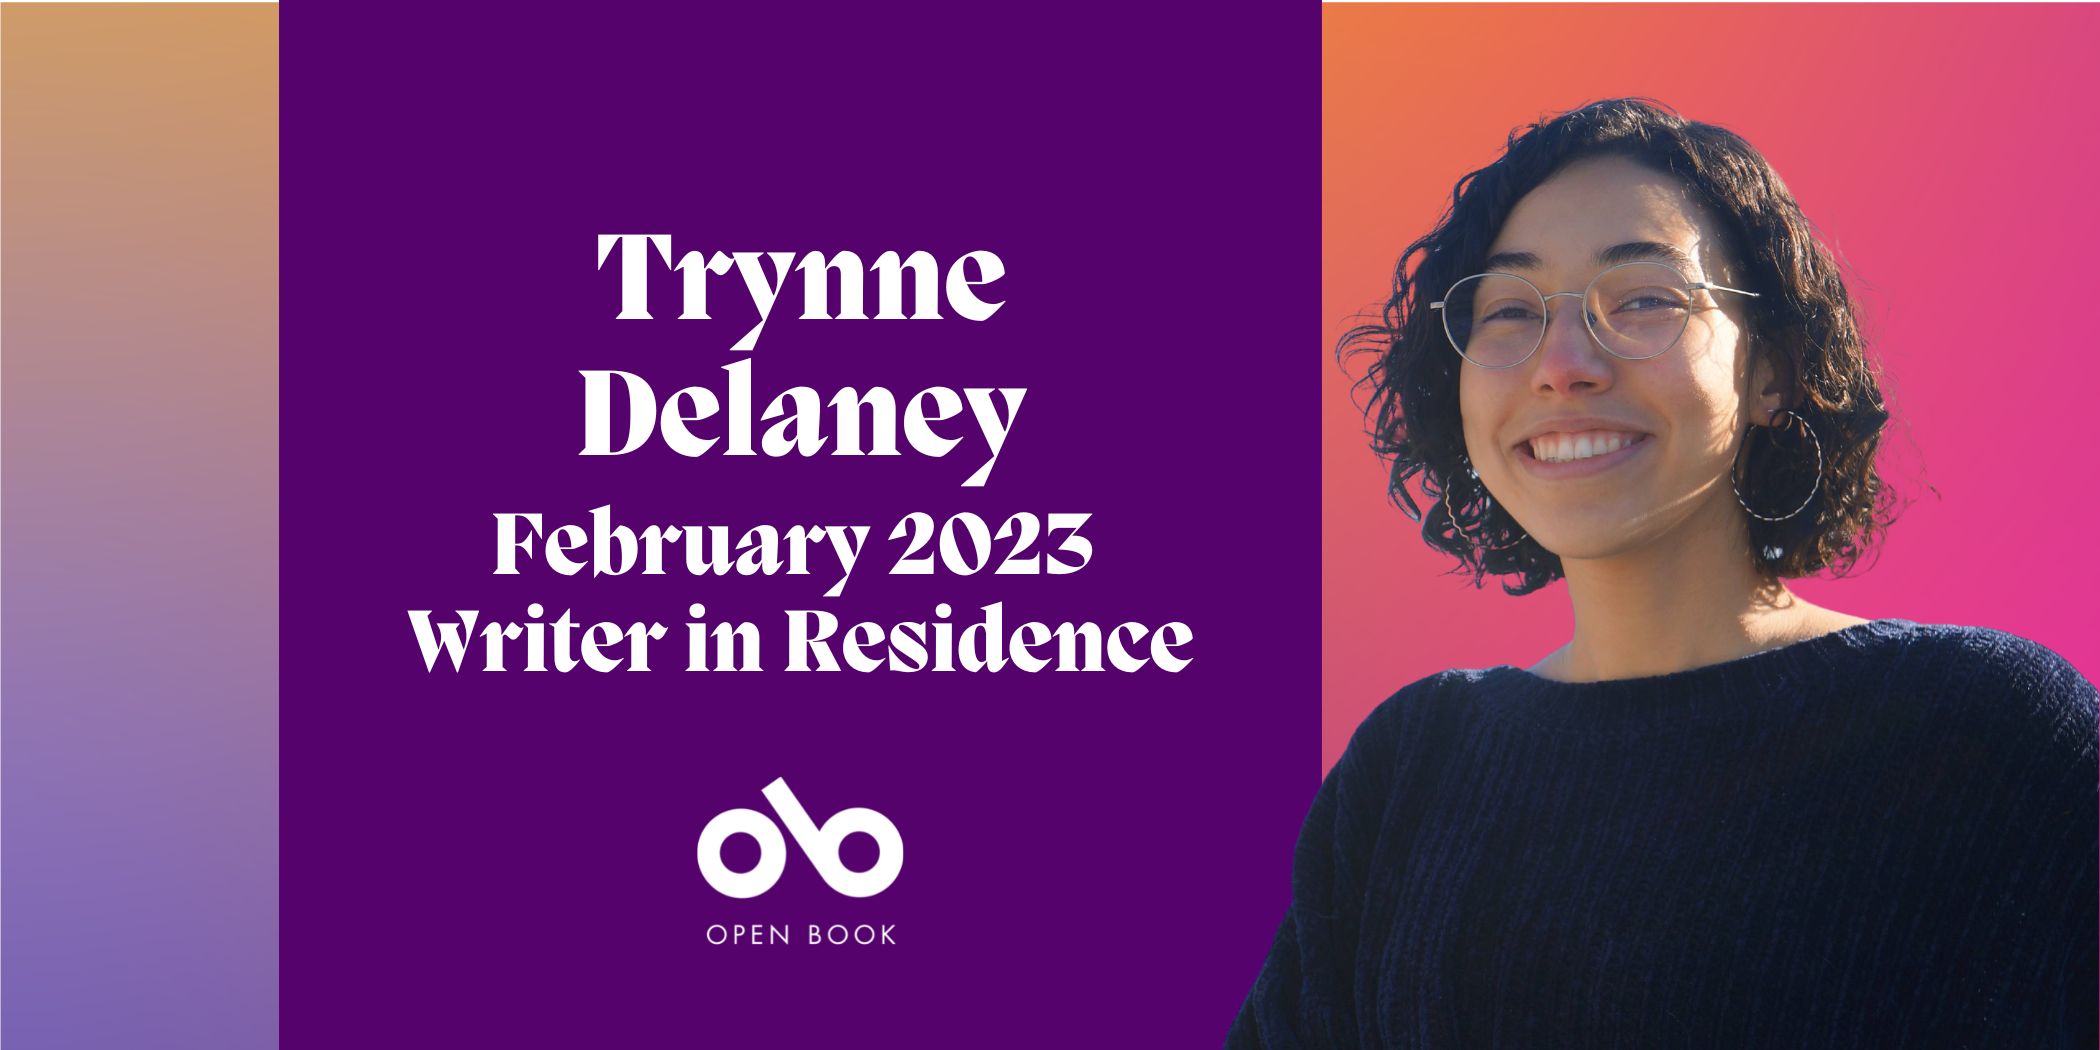 Open Book writer in residence February 2023 Trynne Delaney banner